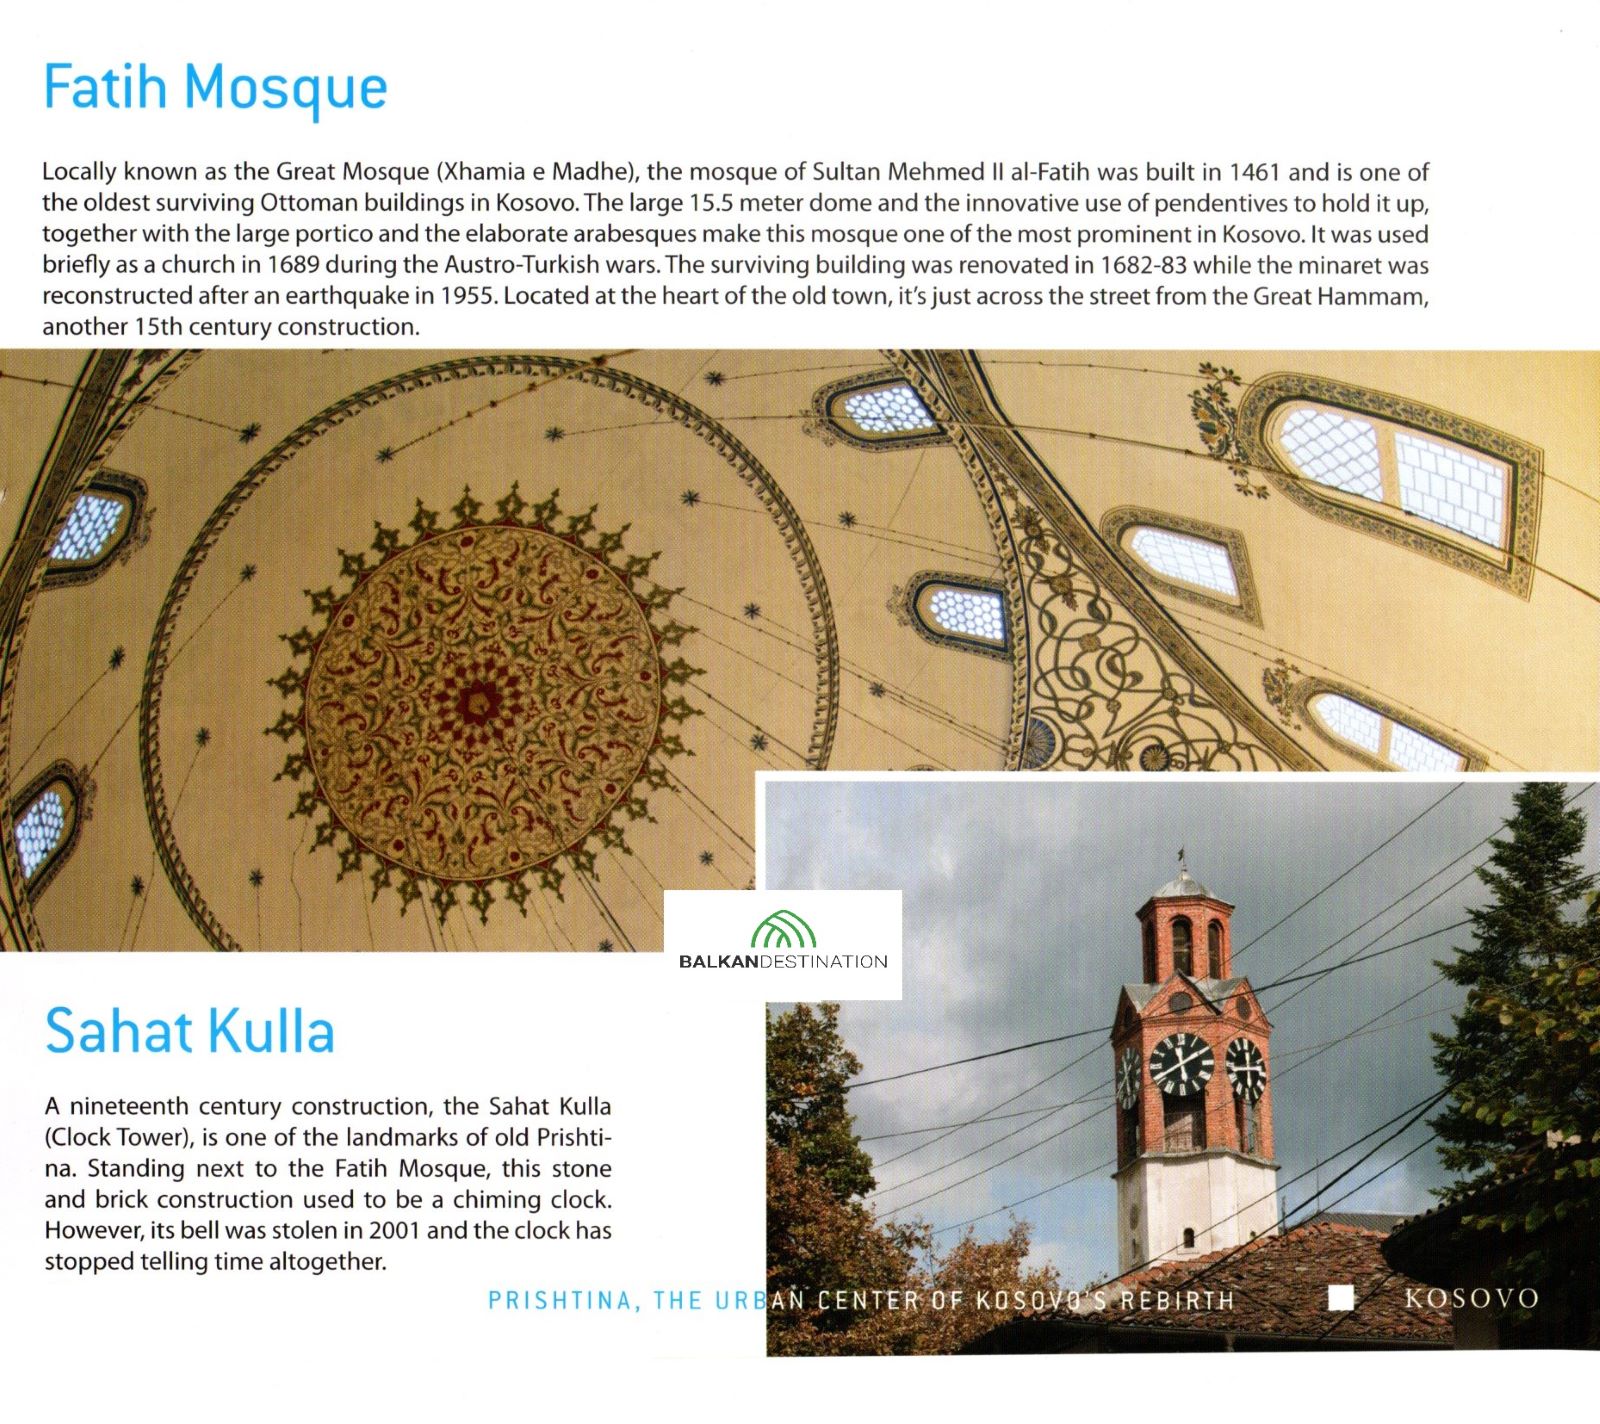 balkandestination fatih mosque clocktower pristina kosovo